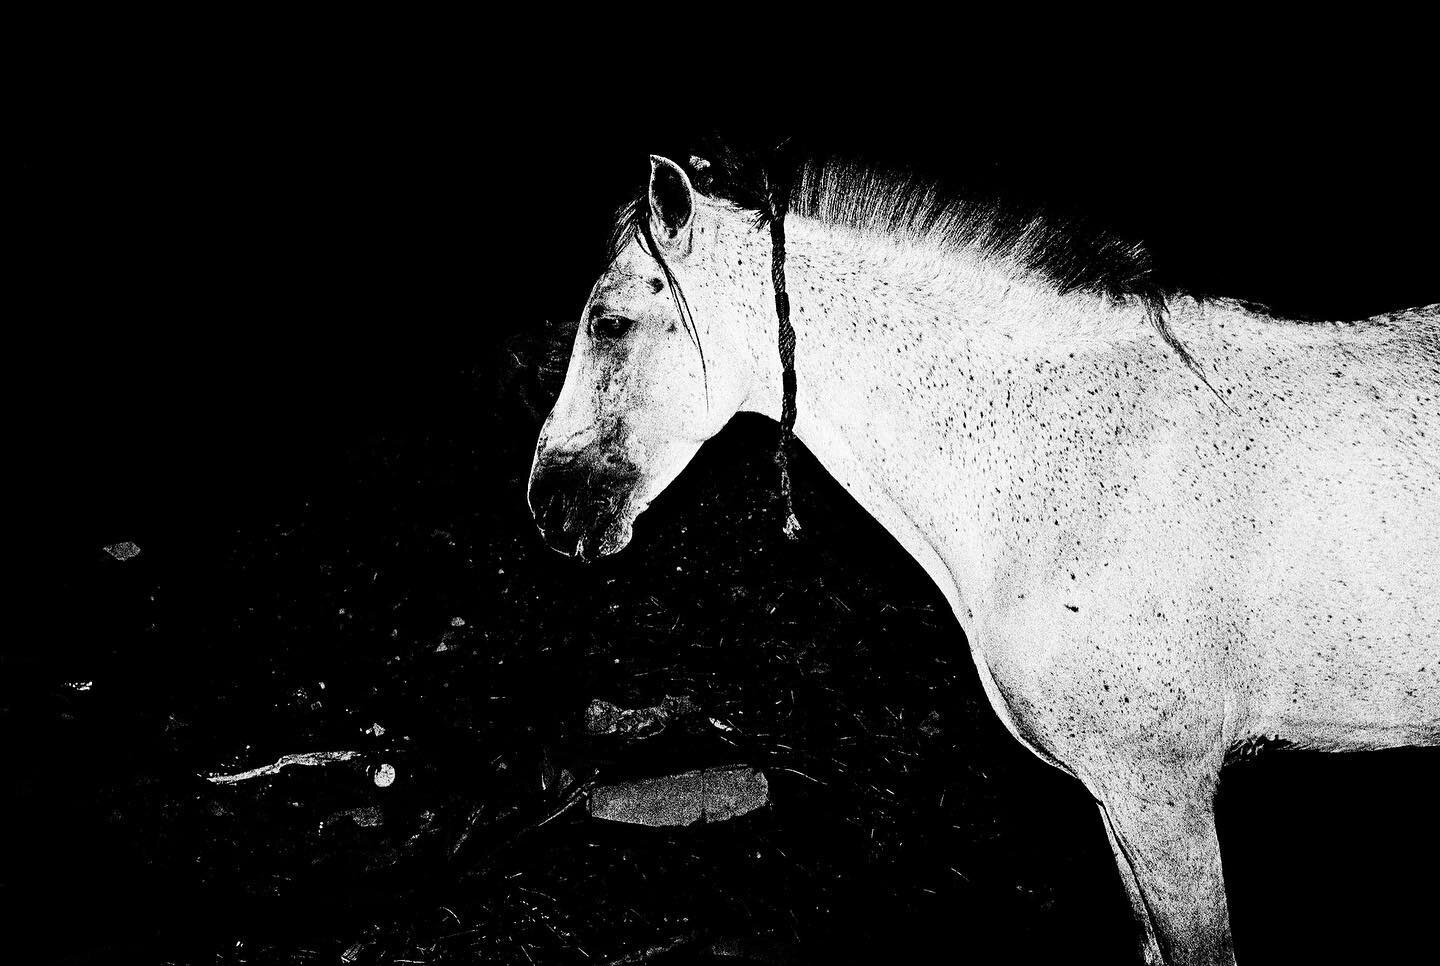 Horse, Dakar, 2016

#saschakraus 
#PhotoBook
#dakar
#senegal

#bffde #derbff #fineartphotography
#filmphotography #filmisnotdead 
#blackandwhite #filmphotography
#istillshootfilm #contemporaryphotography  #visualsoflife #lifeframerstories #filmlovers